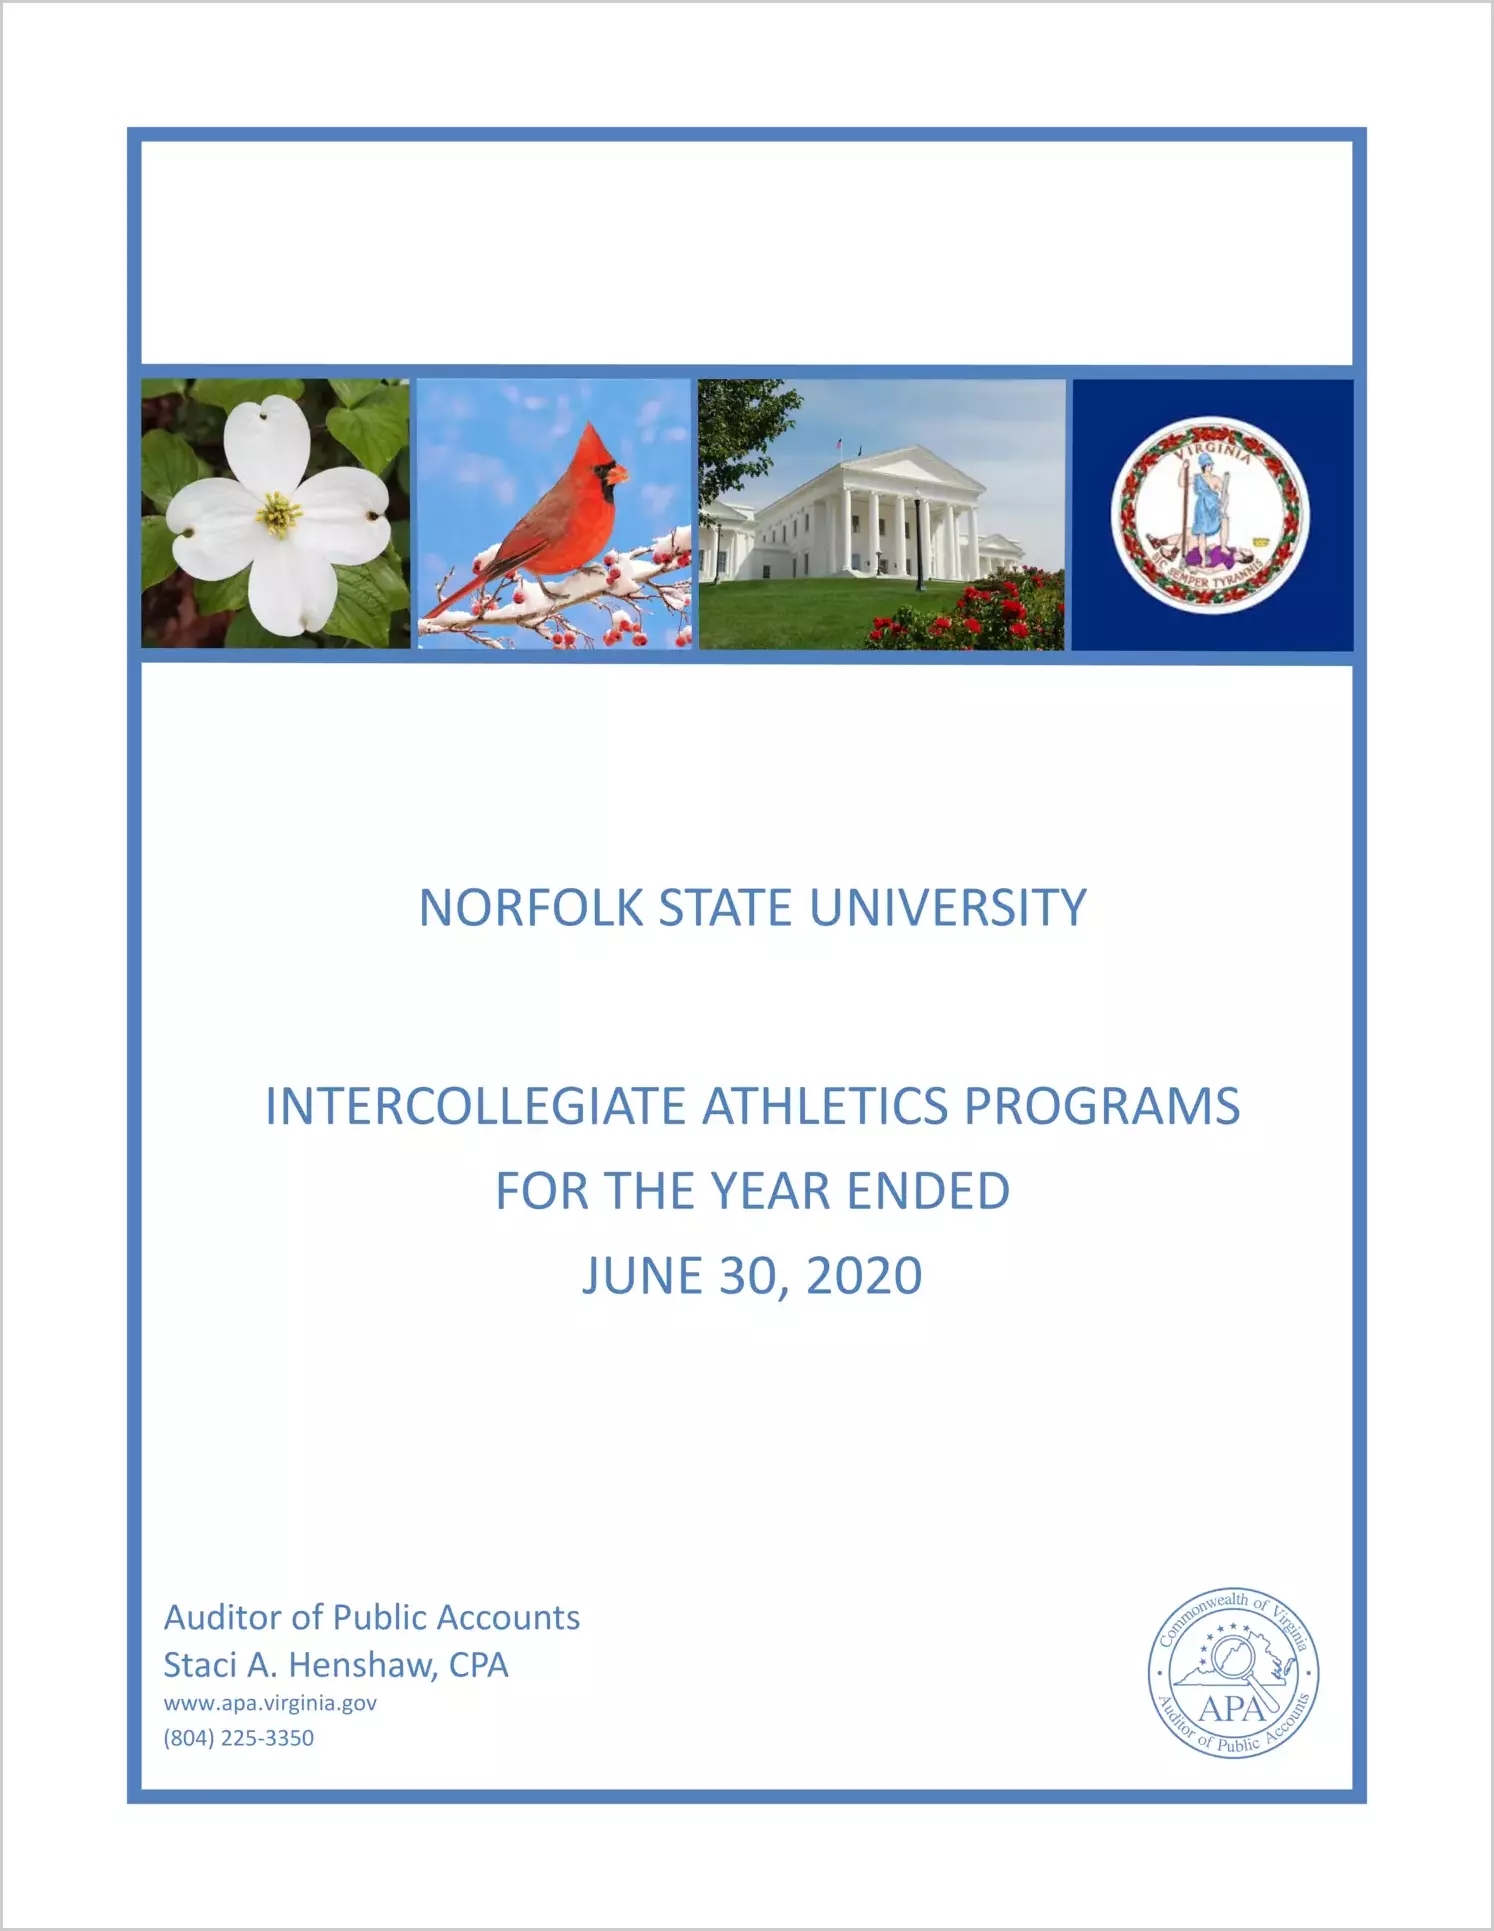 Norfolk State University Intercollegiate Athletics Programs for the year ended June 30, 2020